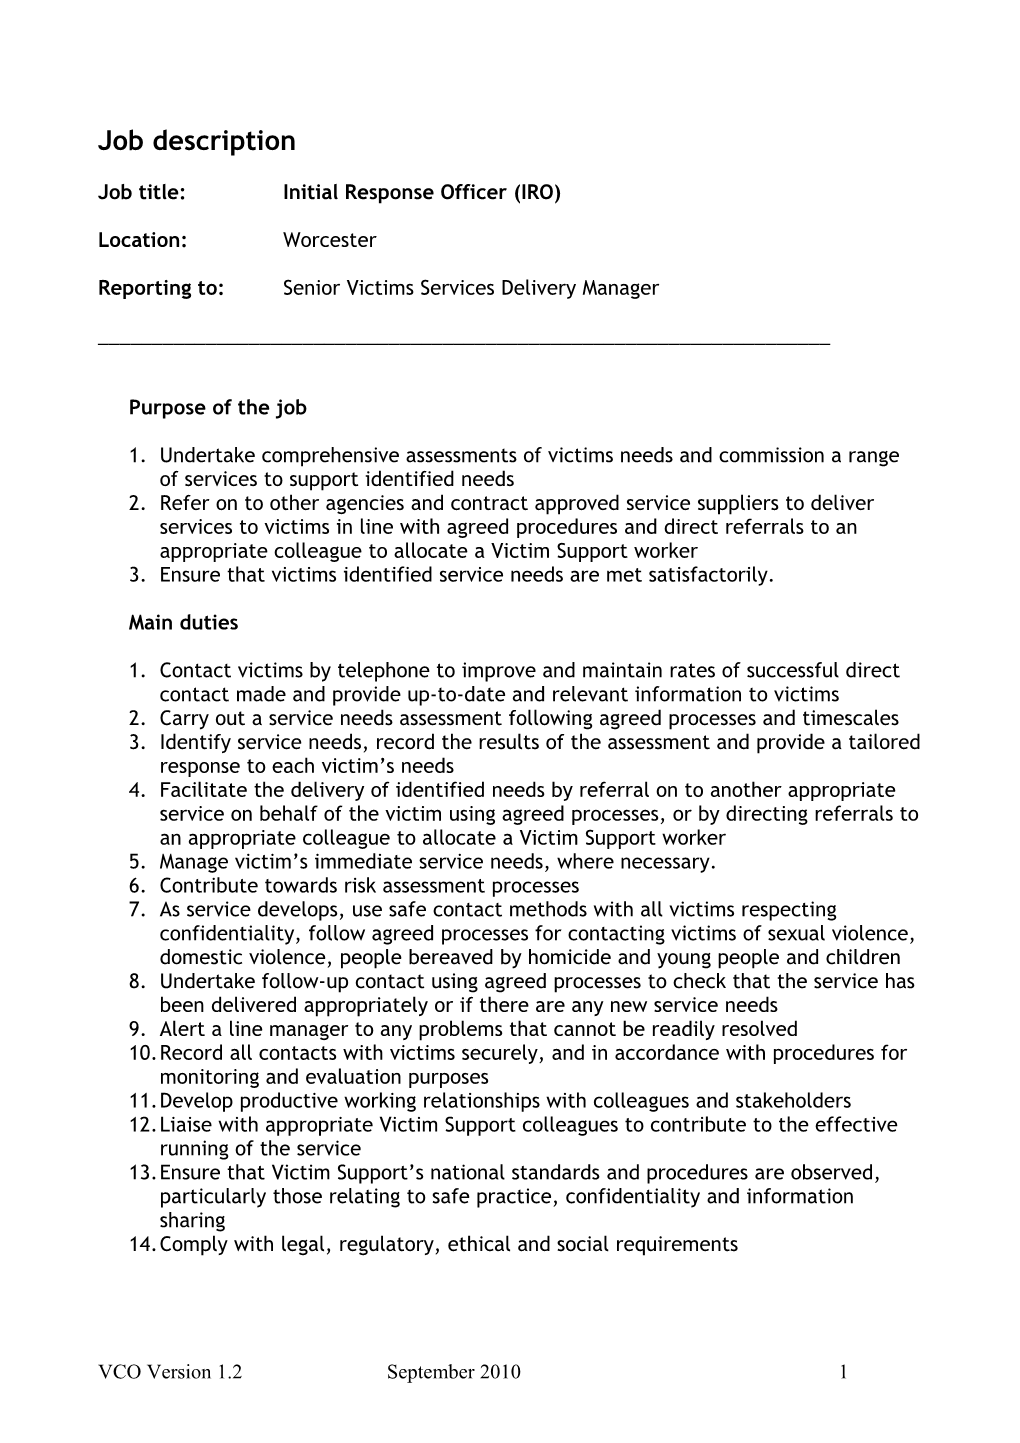 Job Title:Initial Response Officer (IRO)